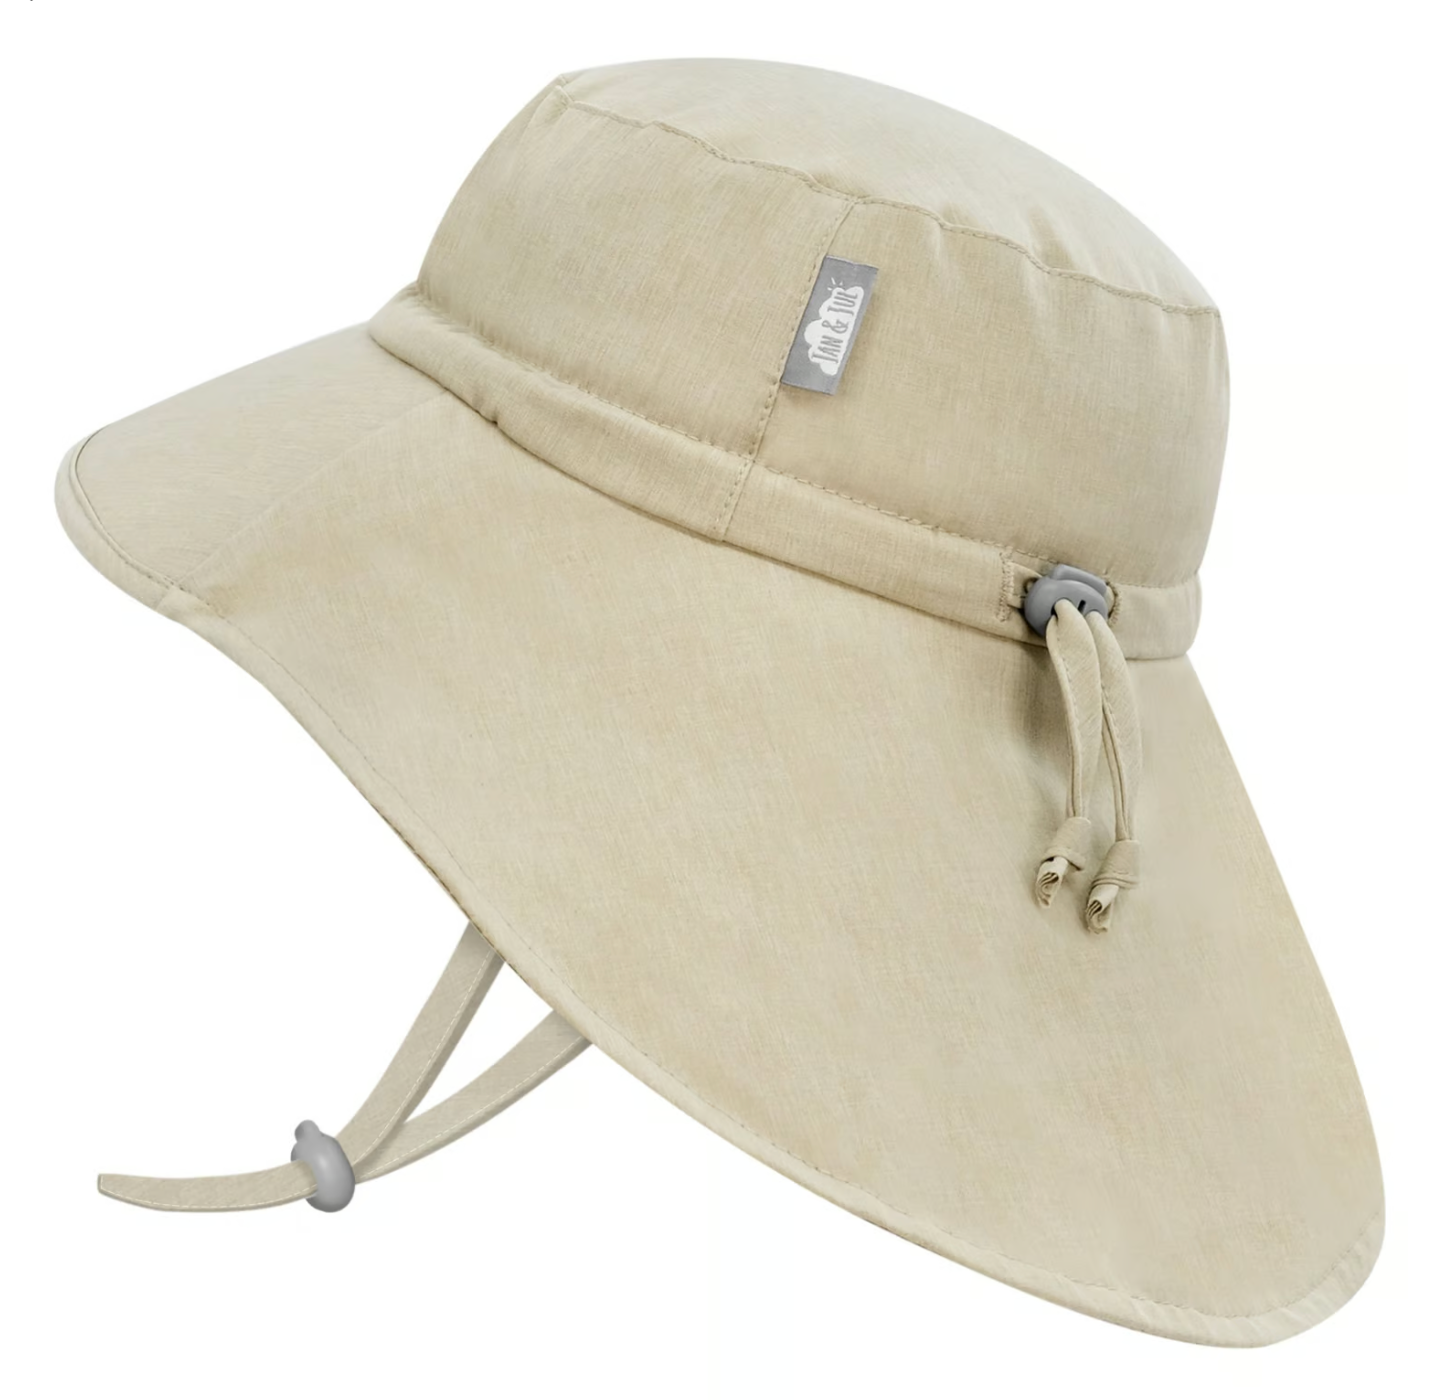 Jan & Jul - Aqua Dry Adventure Hat (Wheat)